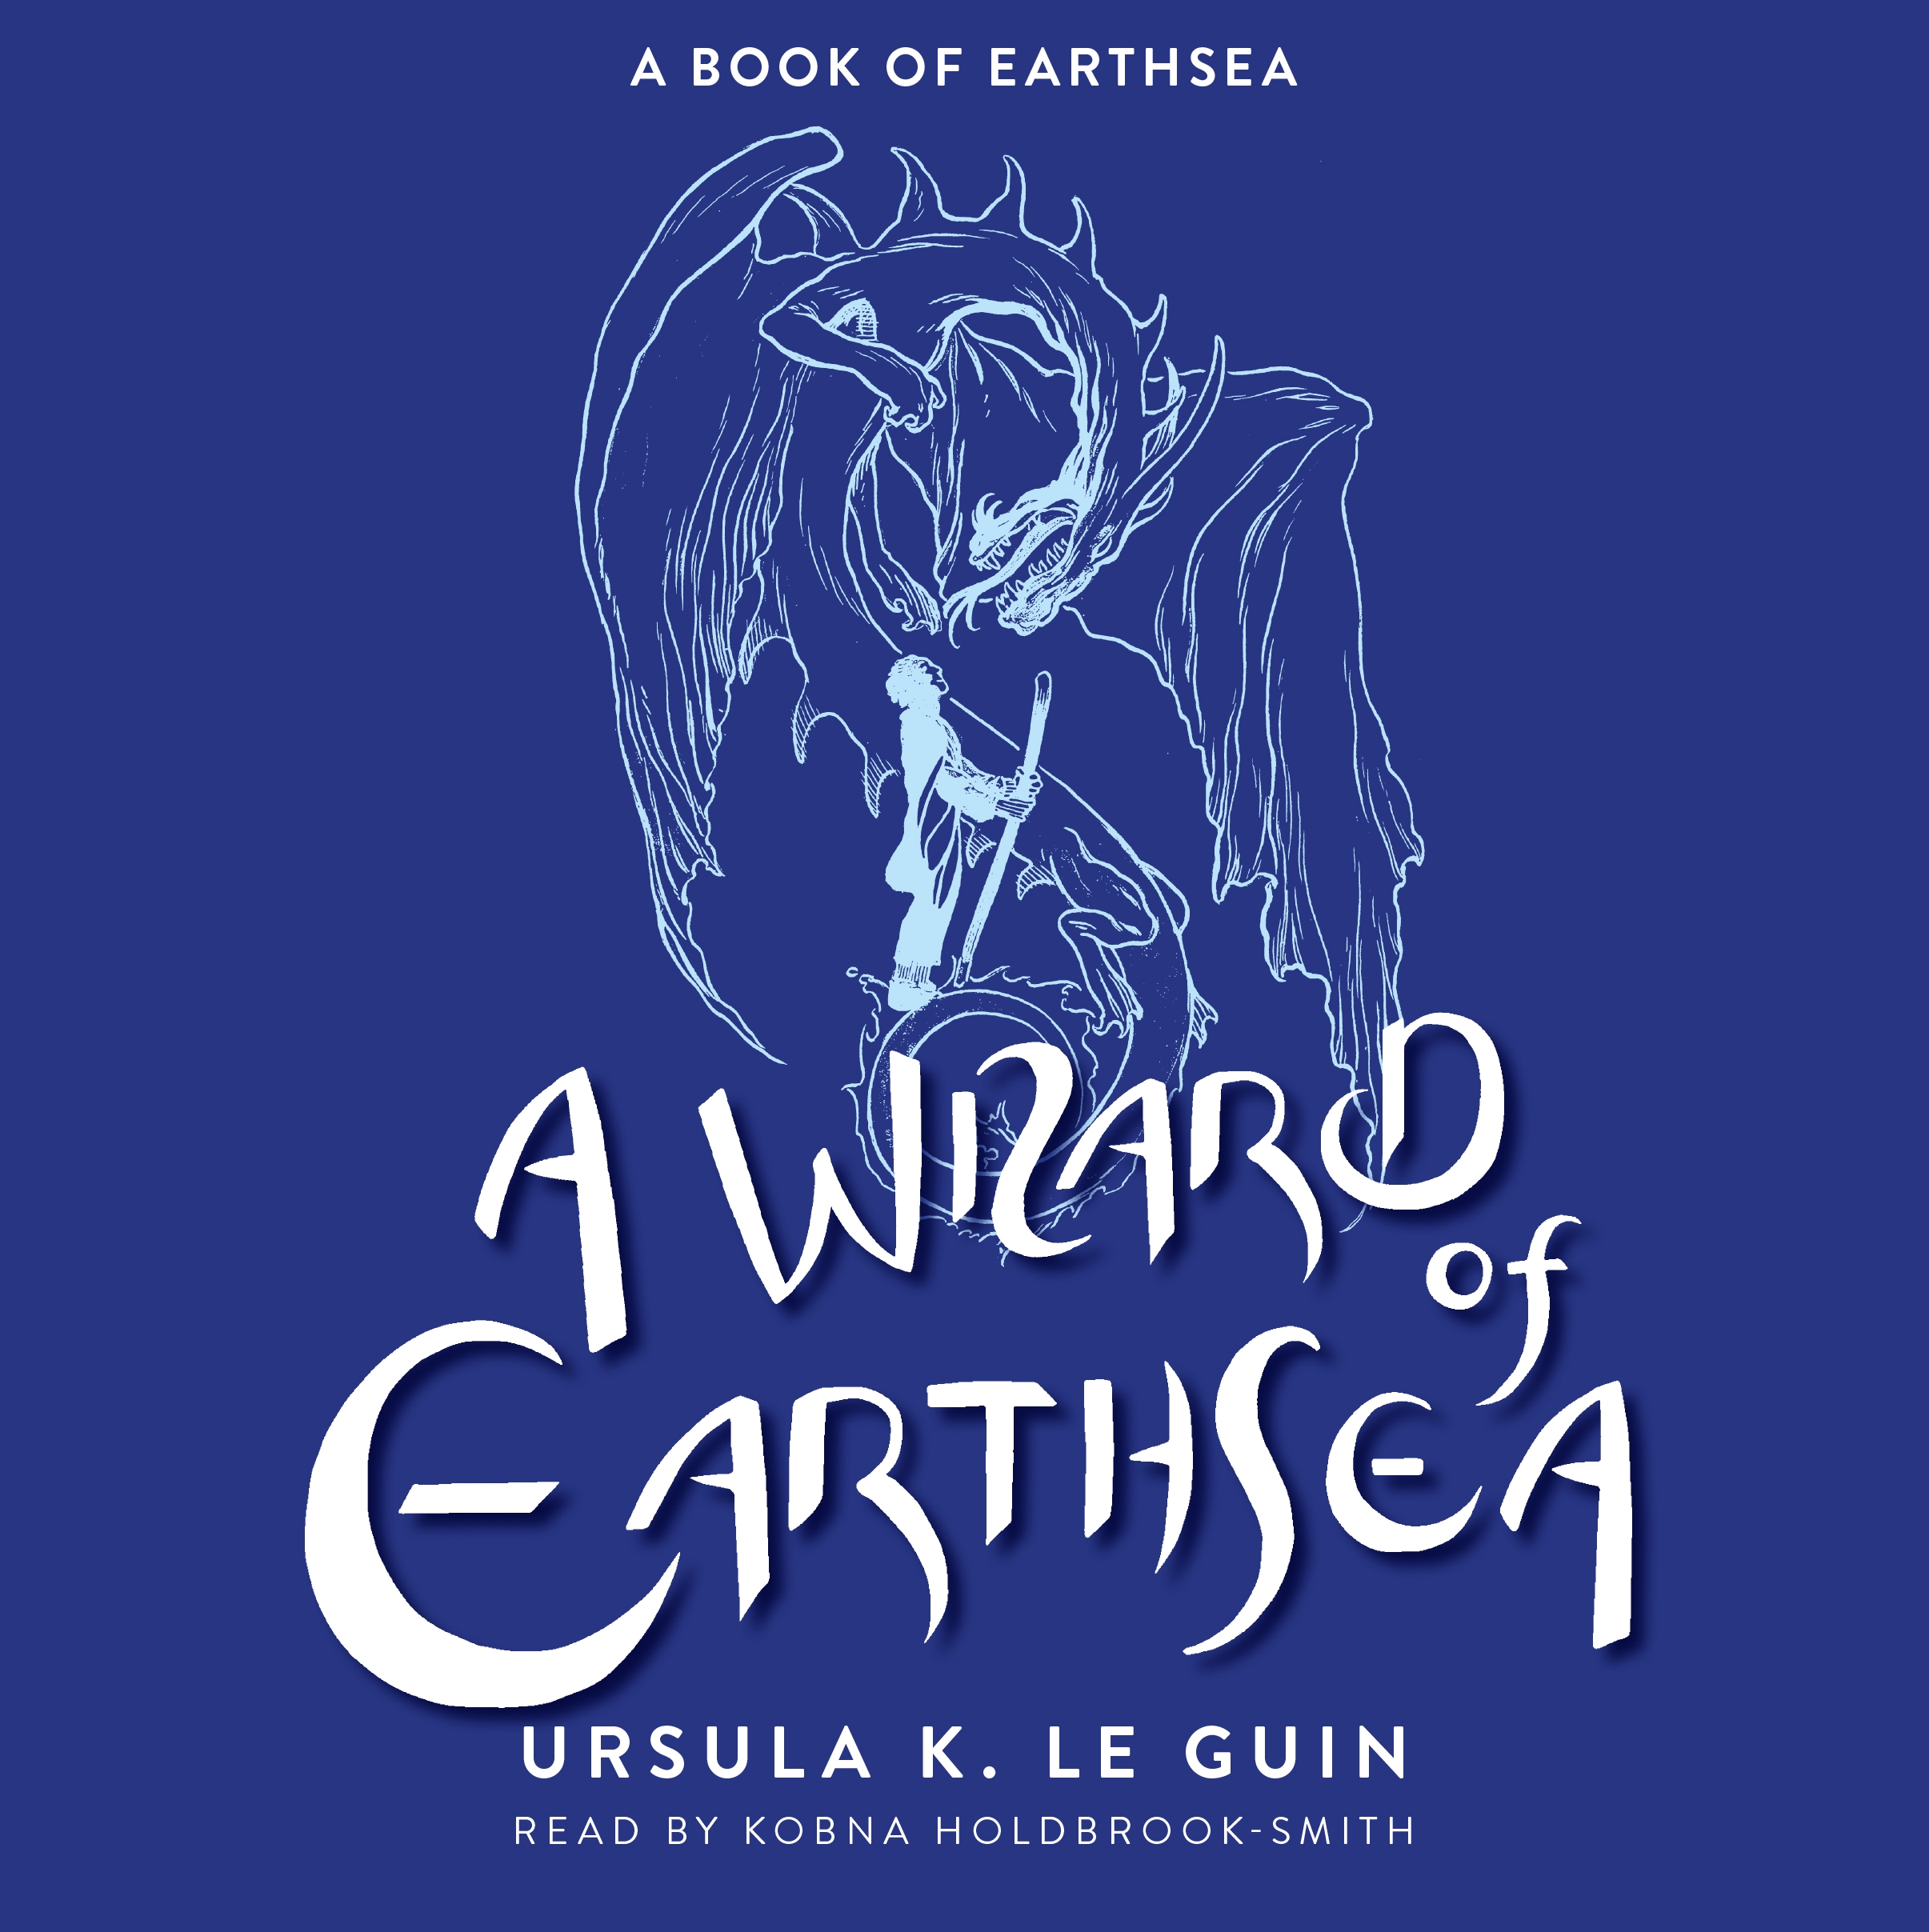 ursula le guin a wizard of earthsea